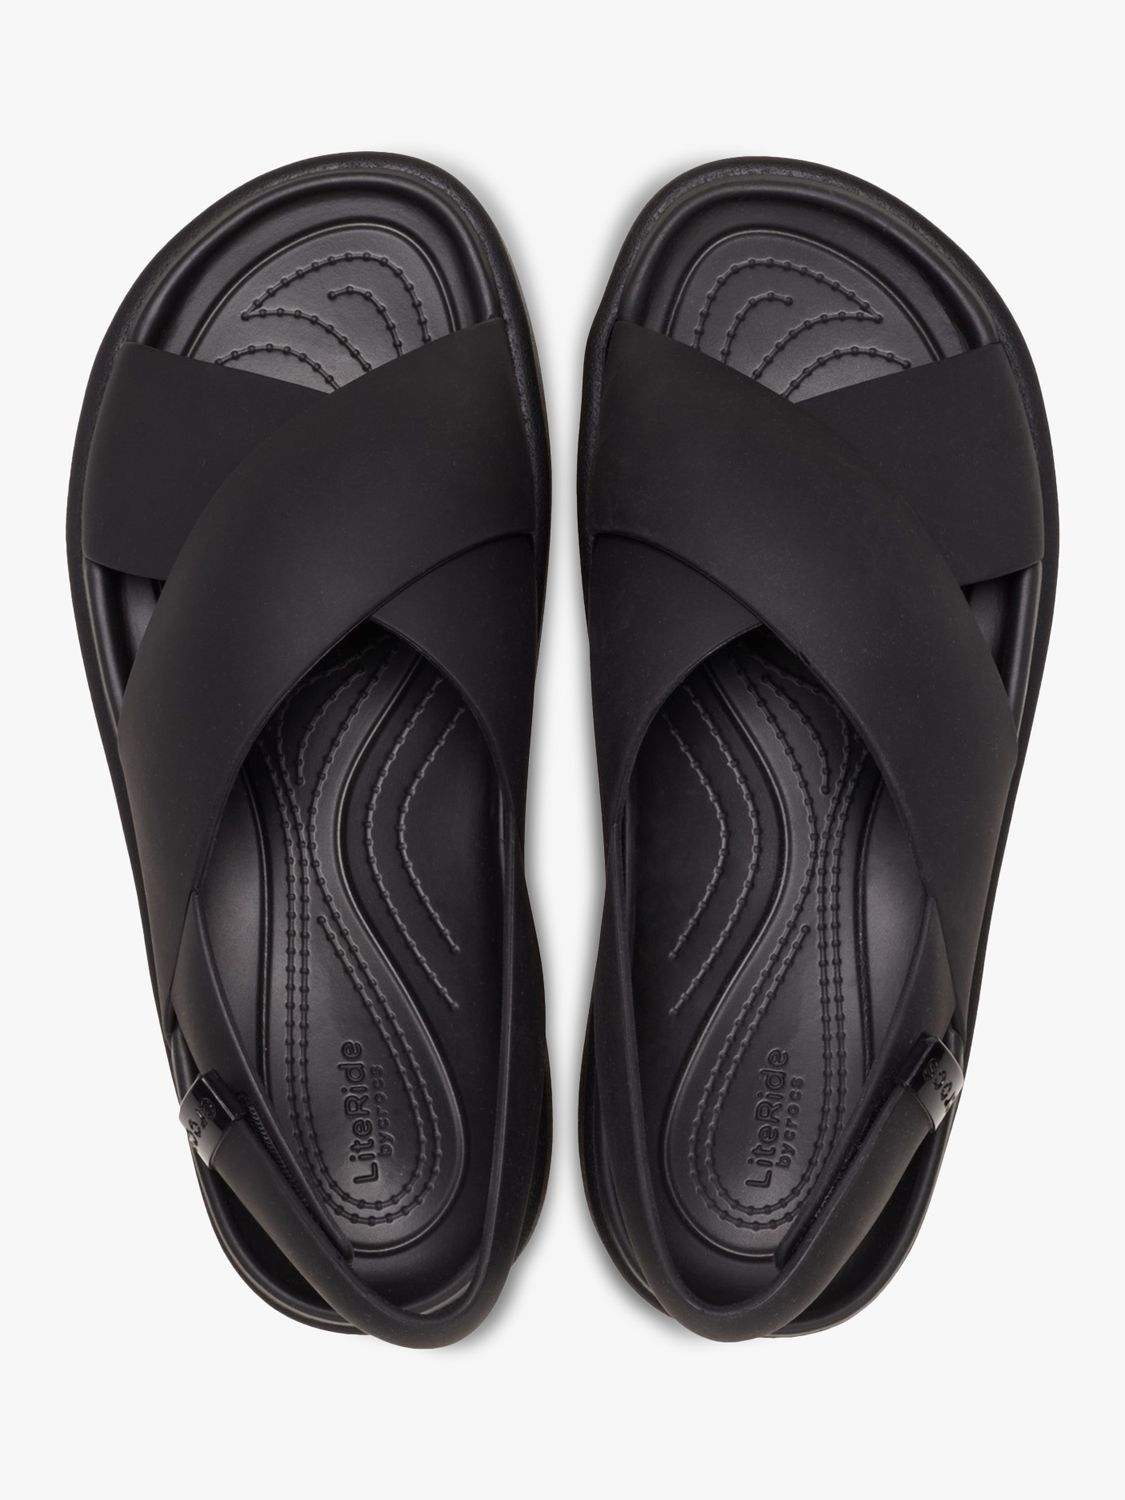 Crocs Brooklyn Luxe X-Strap Sandals, Black, 4